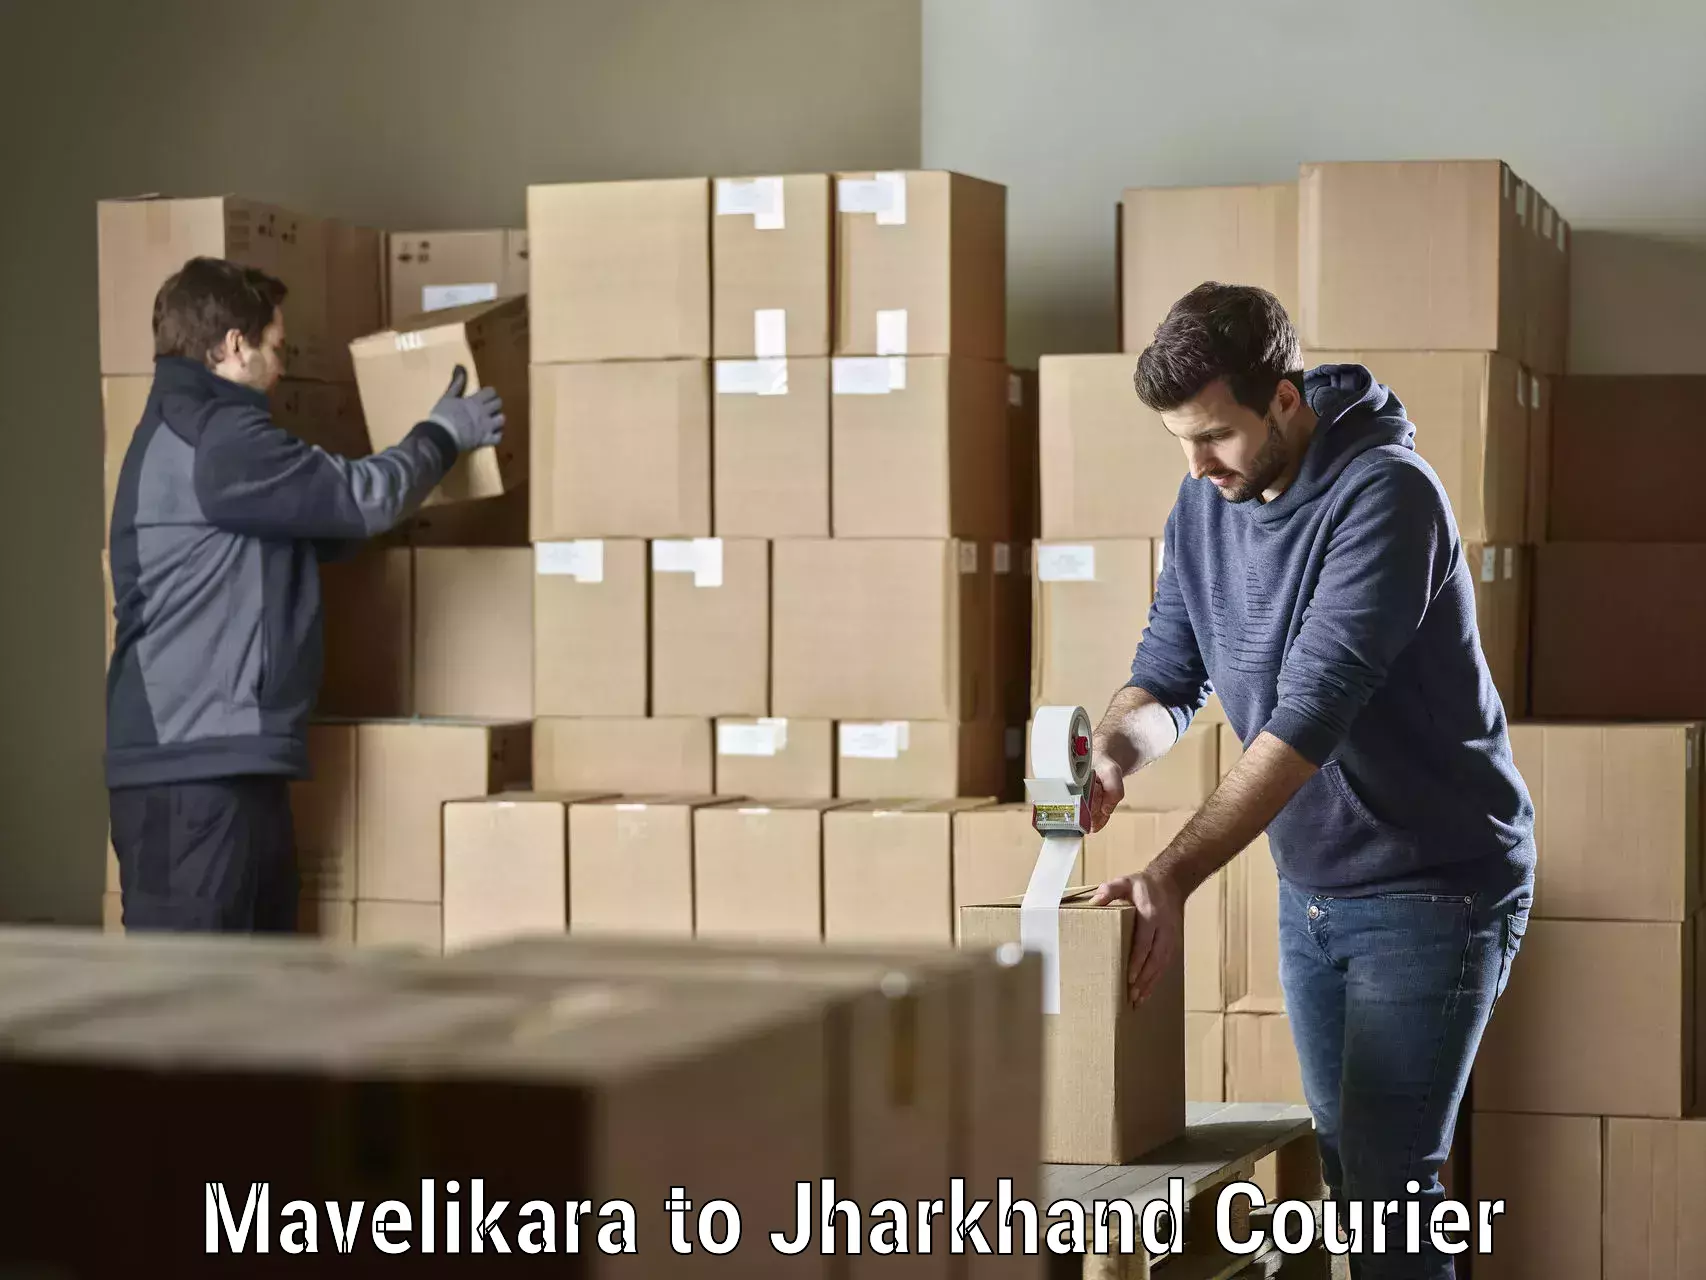 Digital courier platforms Mavelikara to Poreyahat